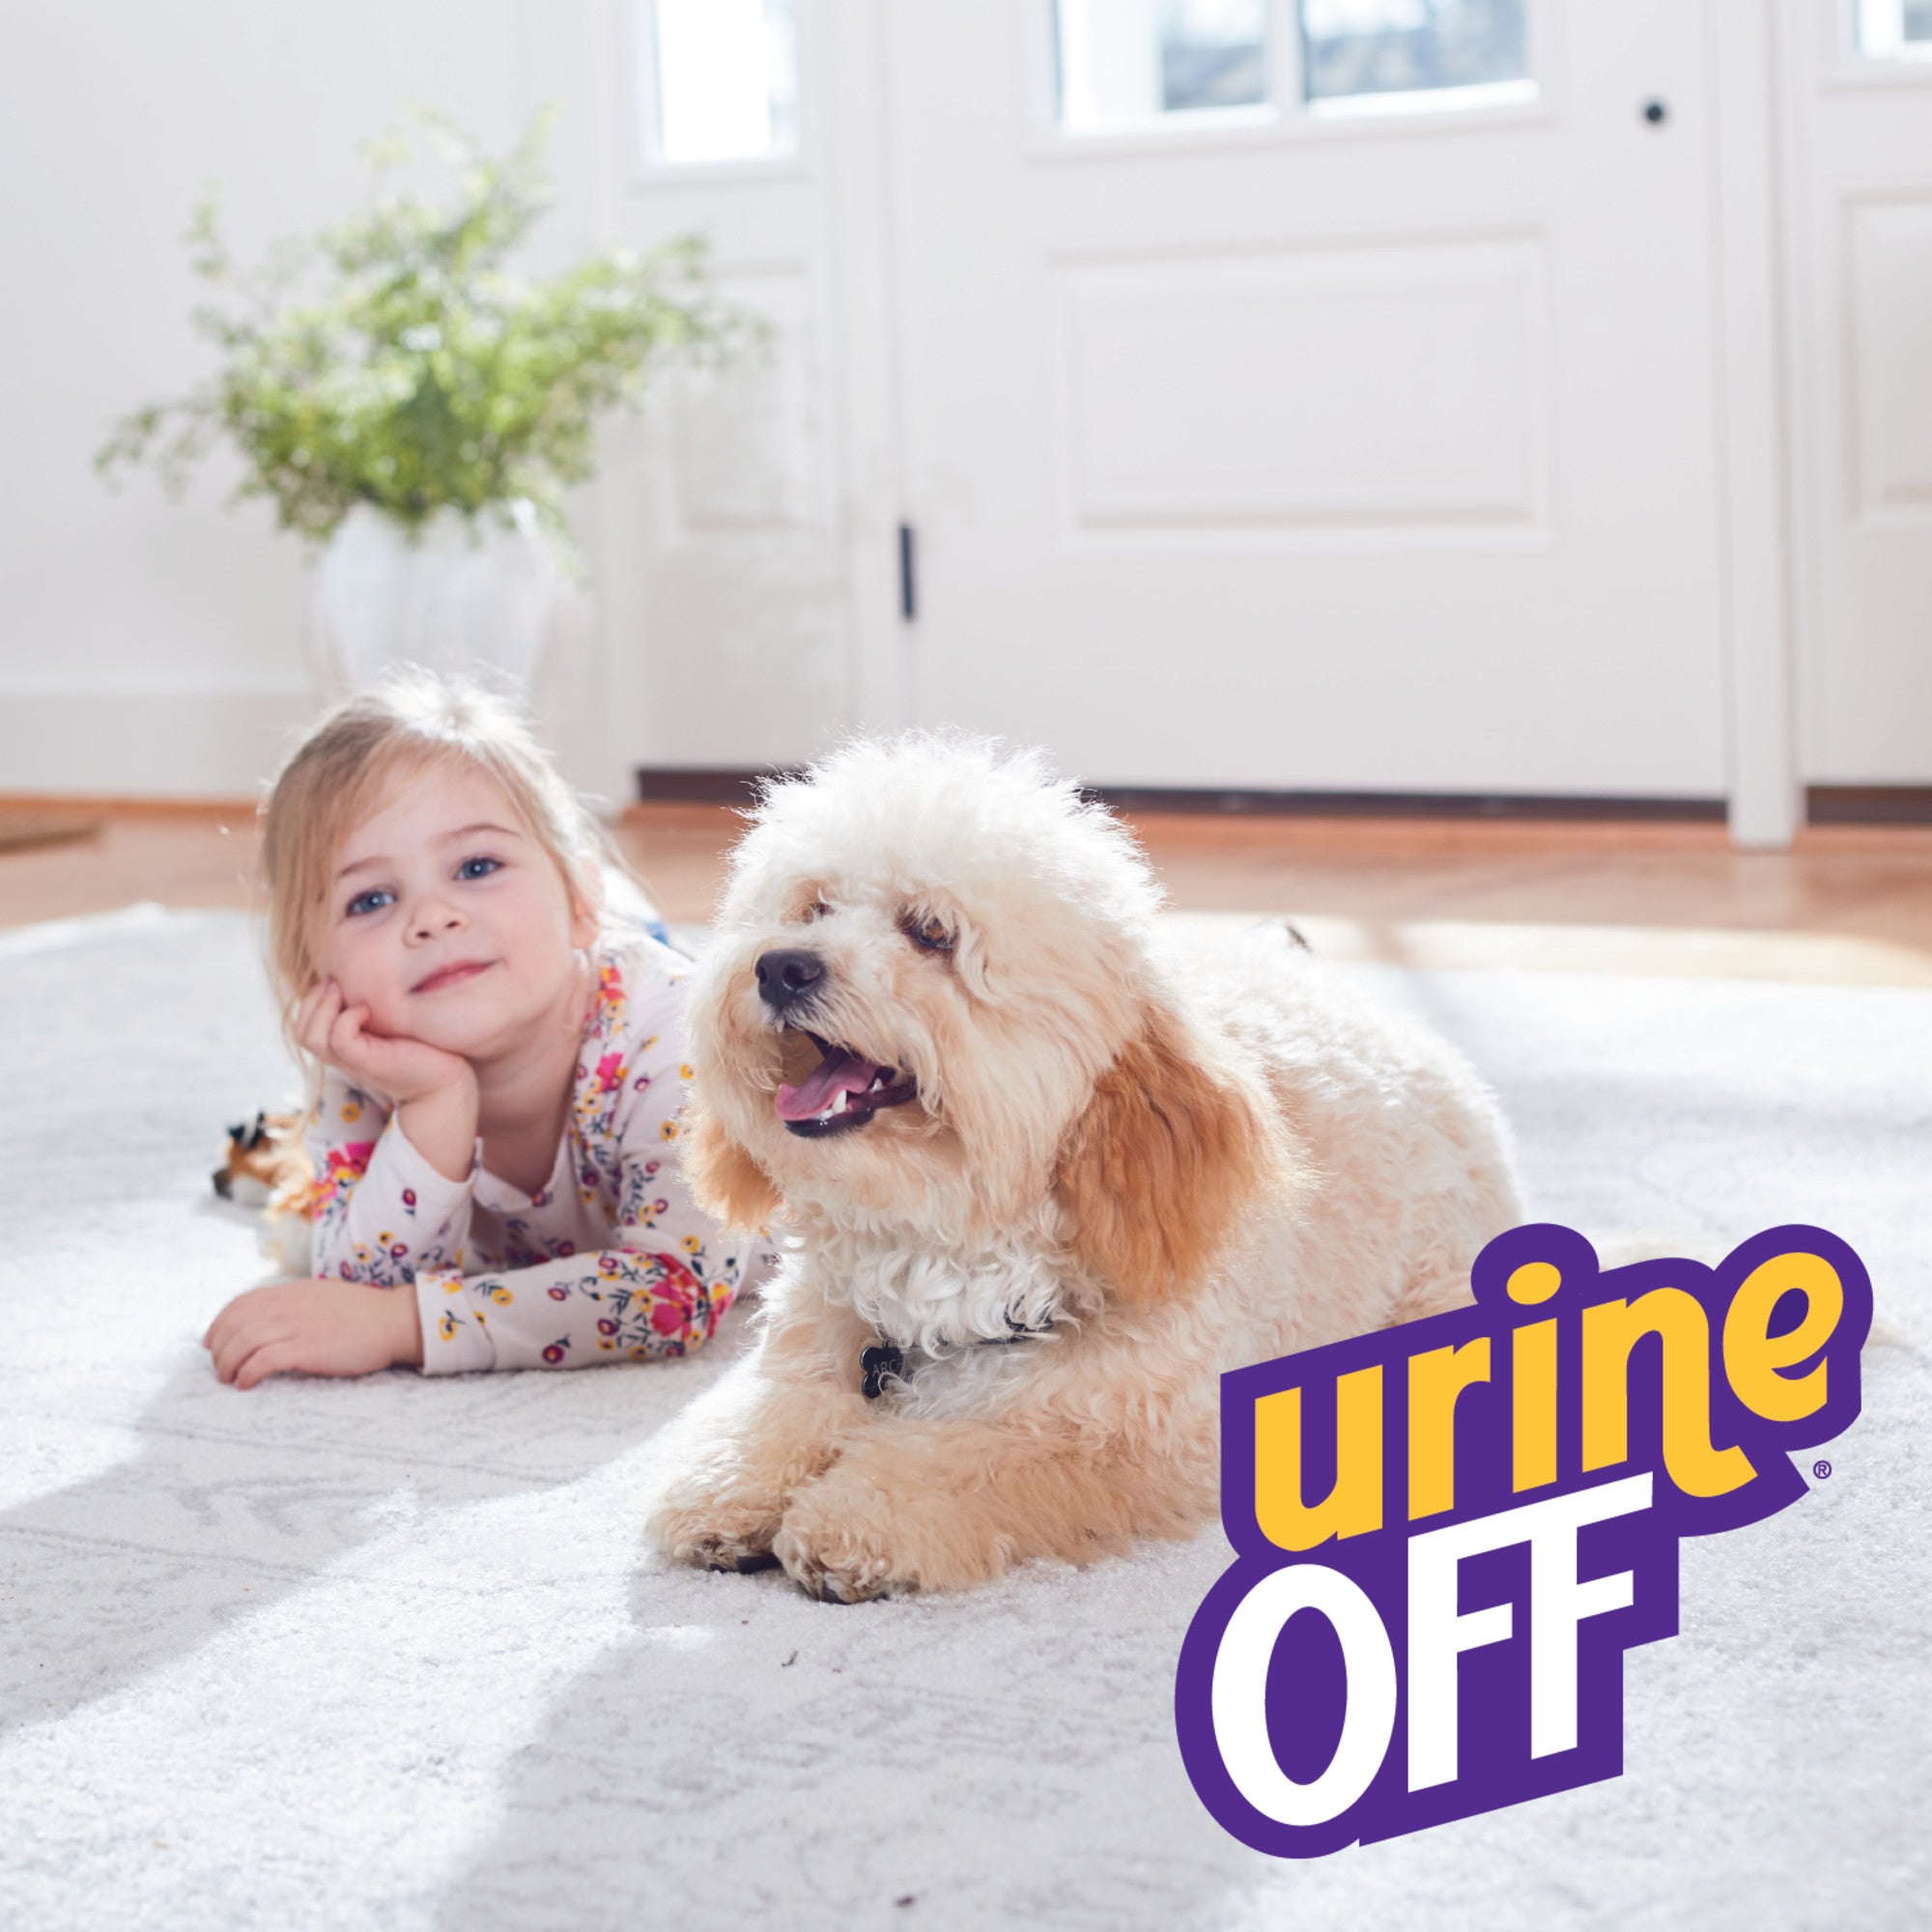 Urine Off - Dog &amp; Puppy Formula - Henlo Pets